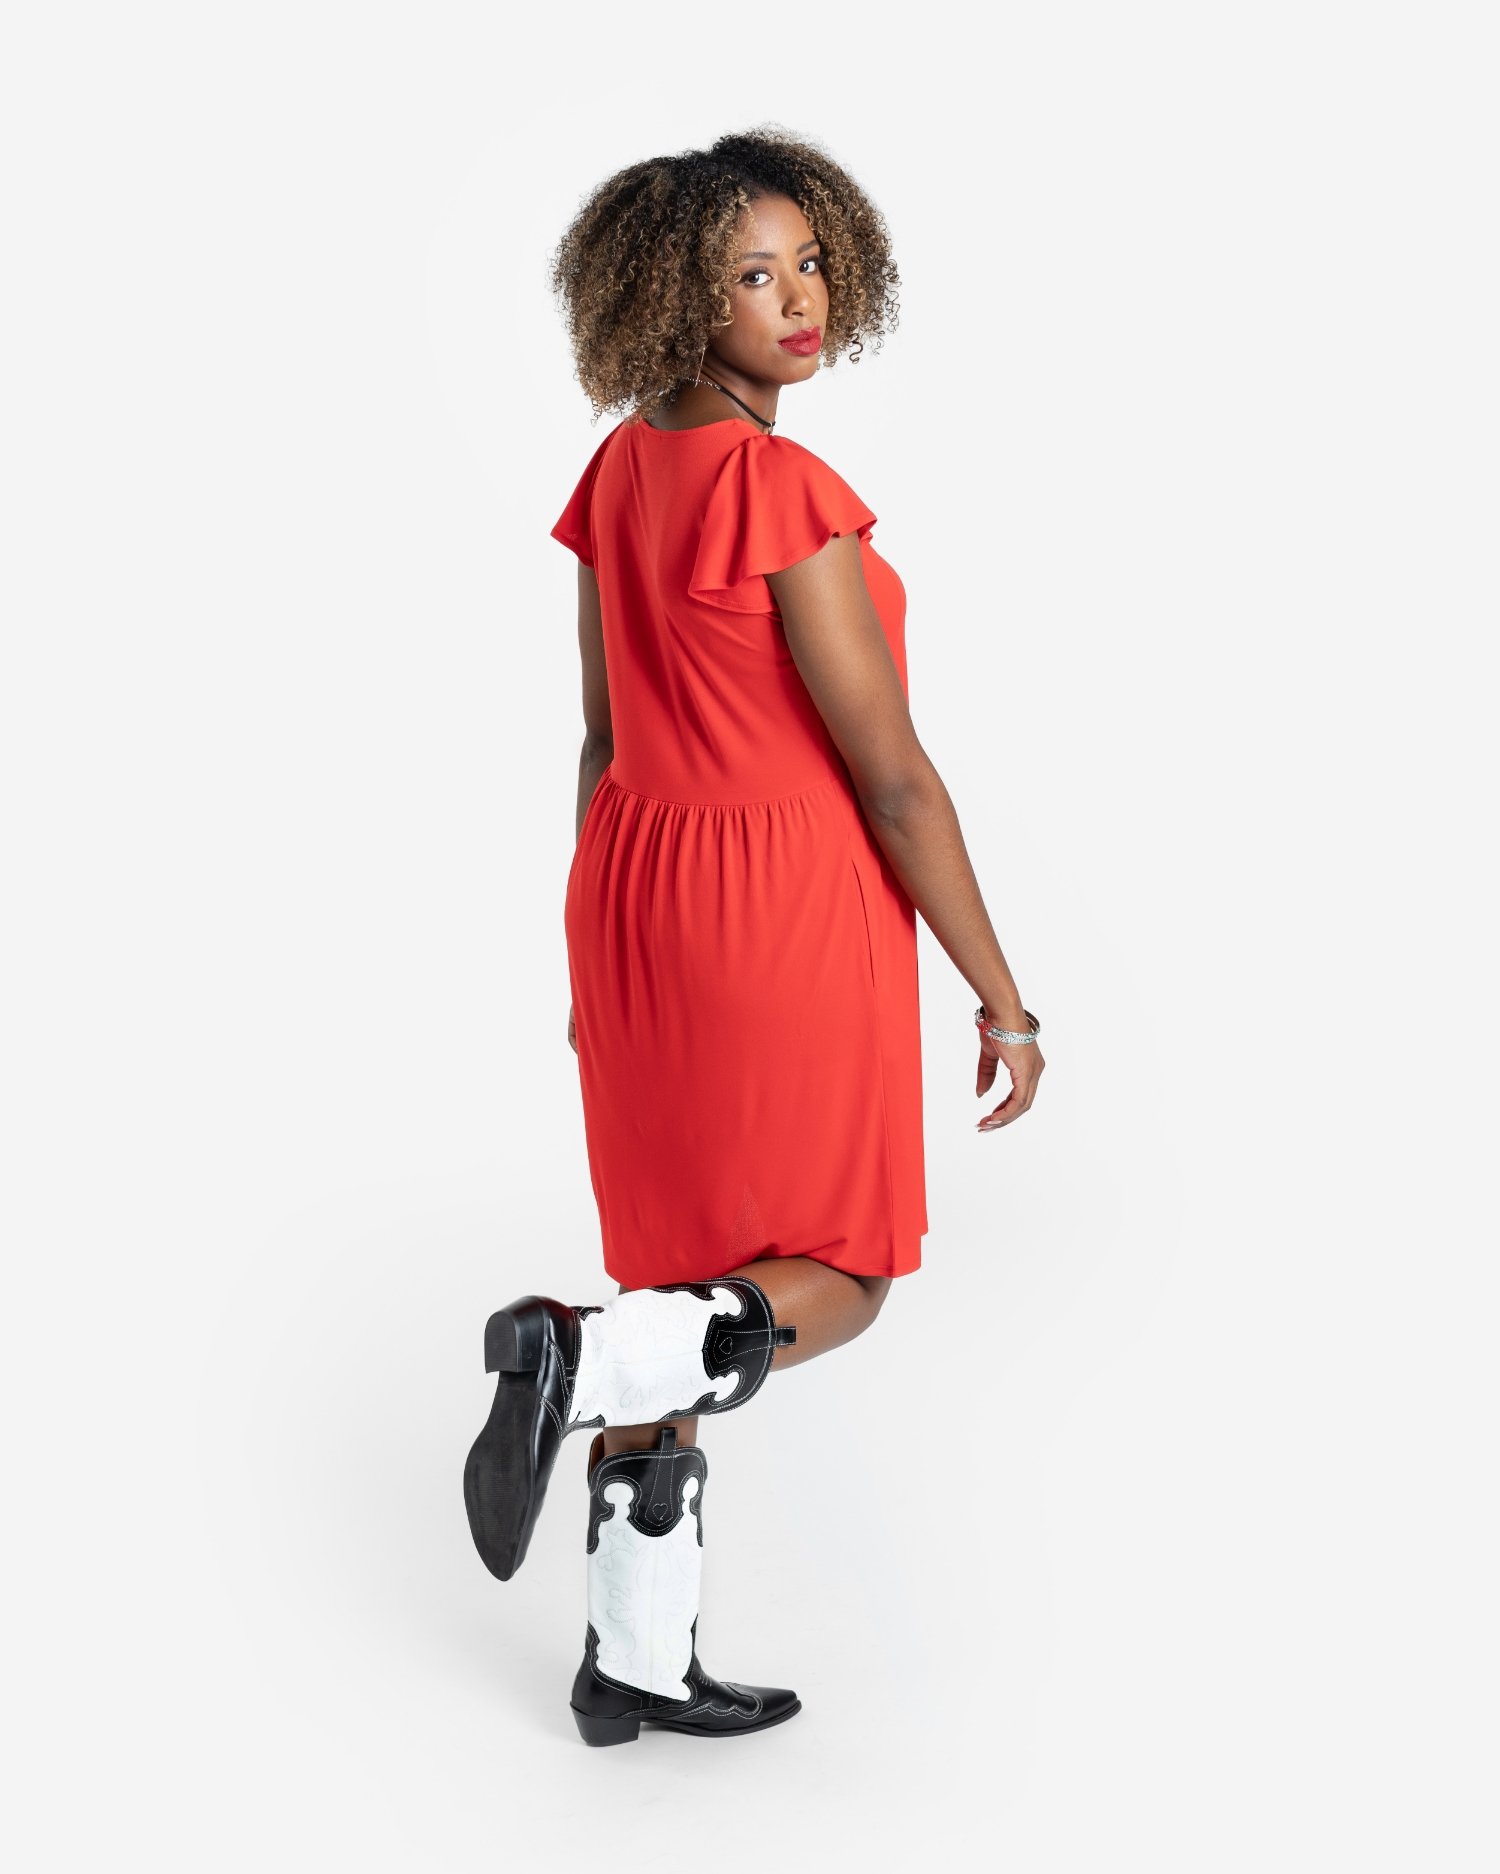 Shake It Up in the All-New LuLaRoe Chaylin Ruffle Sleeve V-Neck Dress